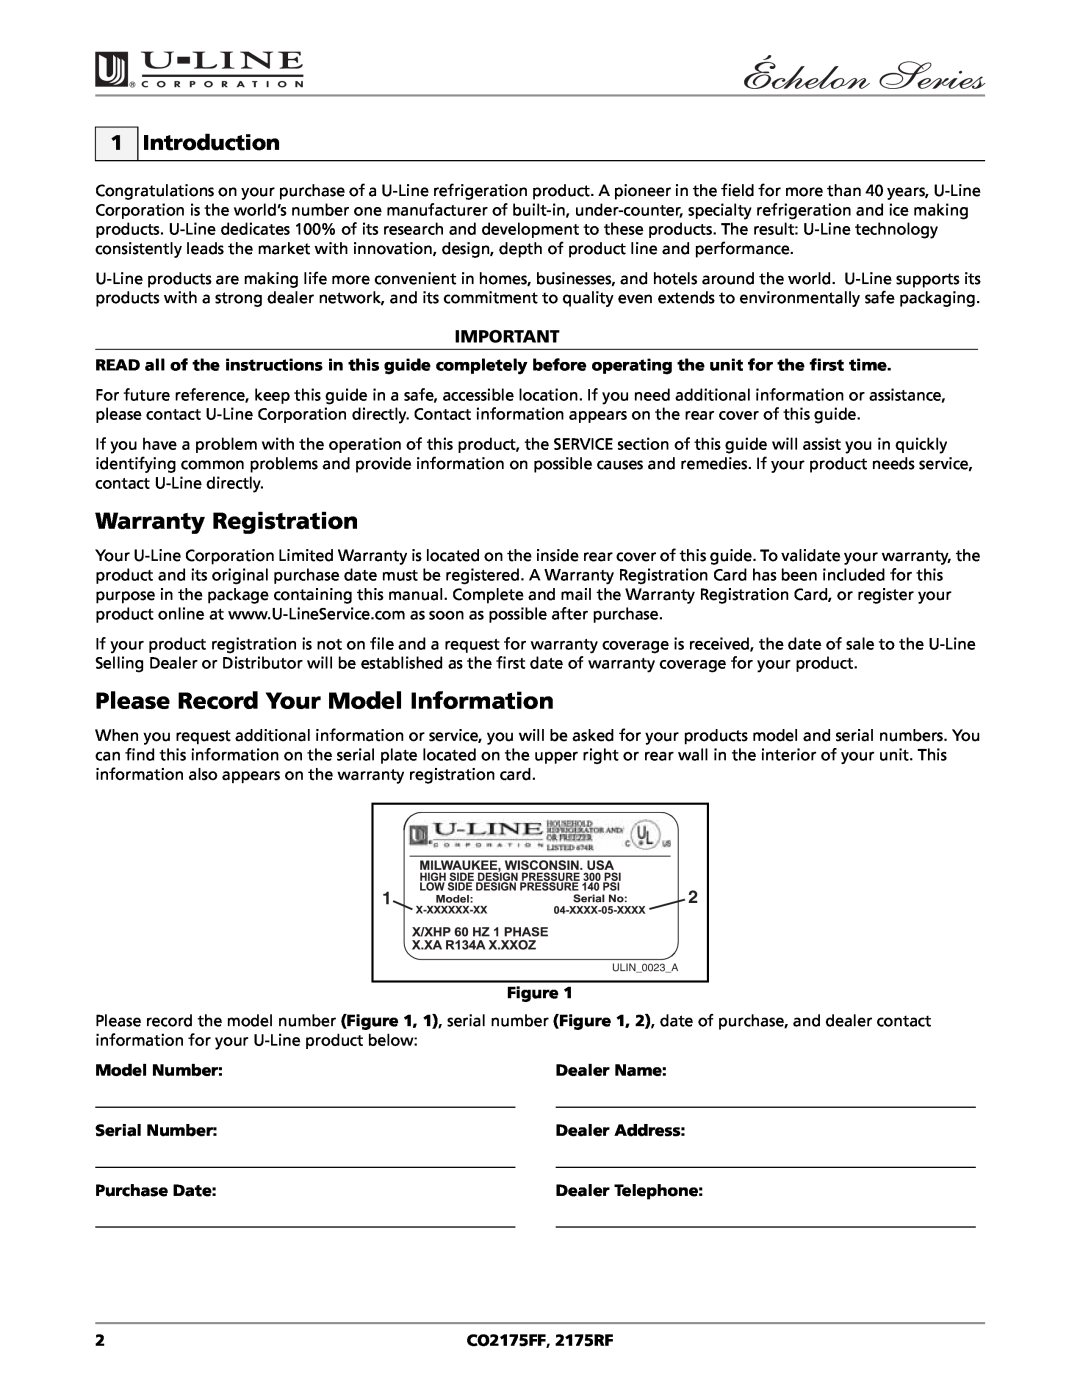 U-Line CO2175FF 2175RF manual Warranty Registration, Please Record Your Model Information, Introduction, Model Number 